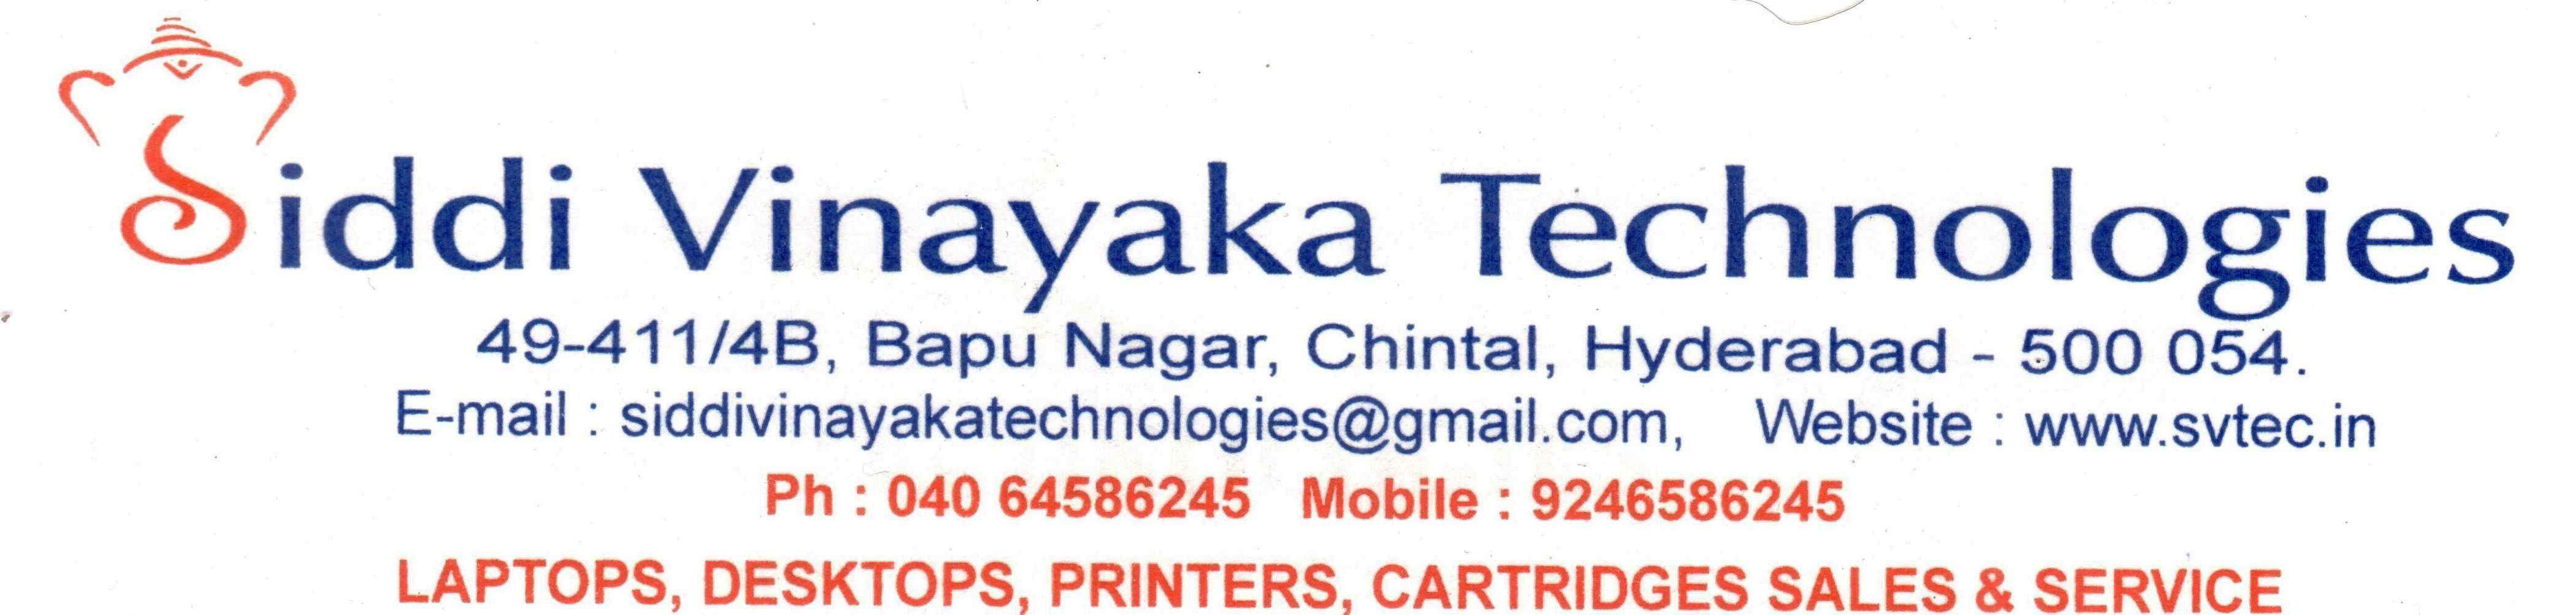 Siddi Vinayaka Technologies